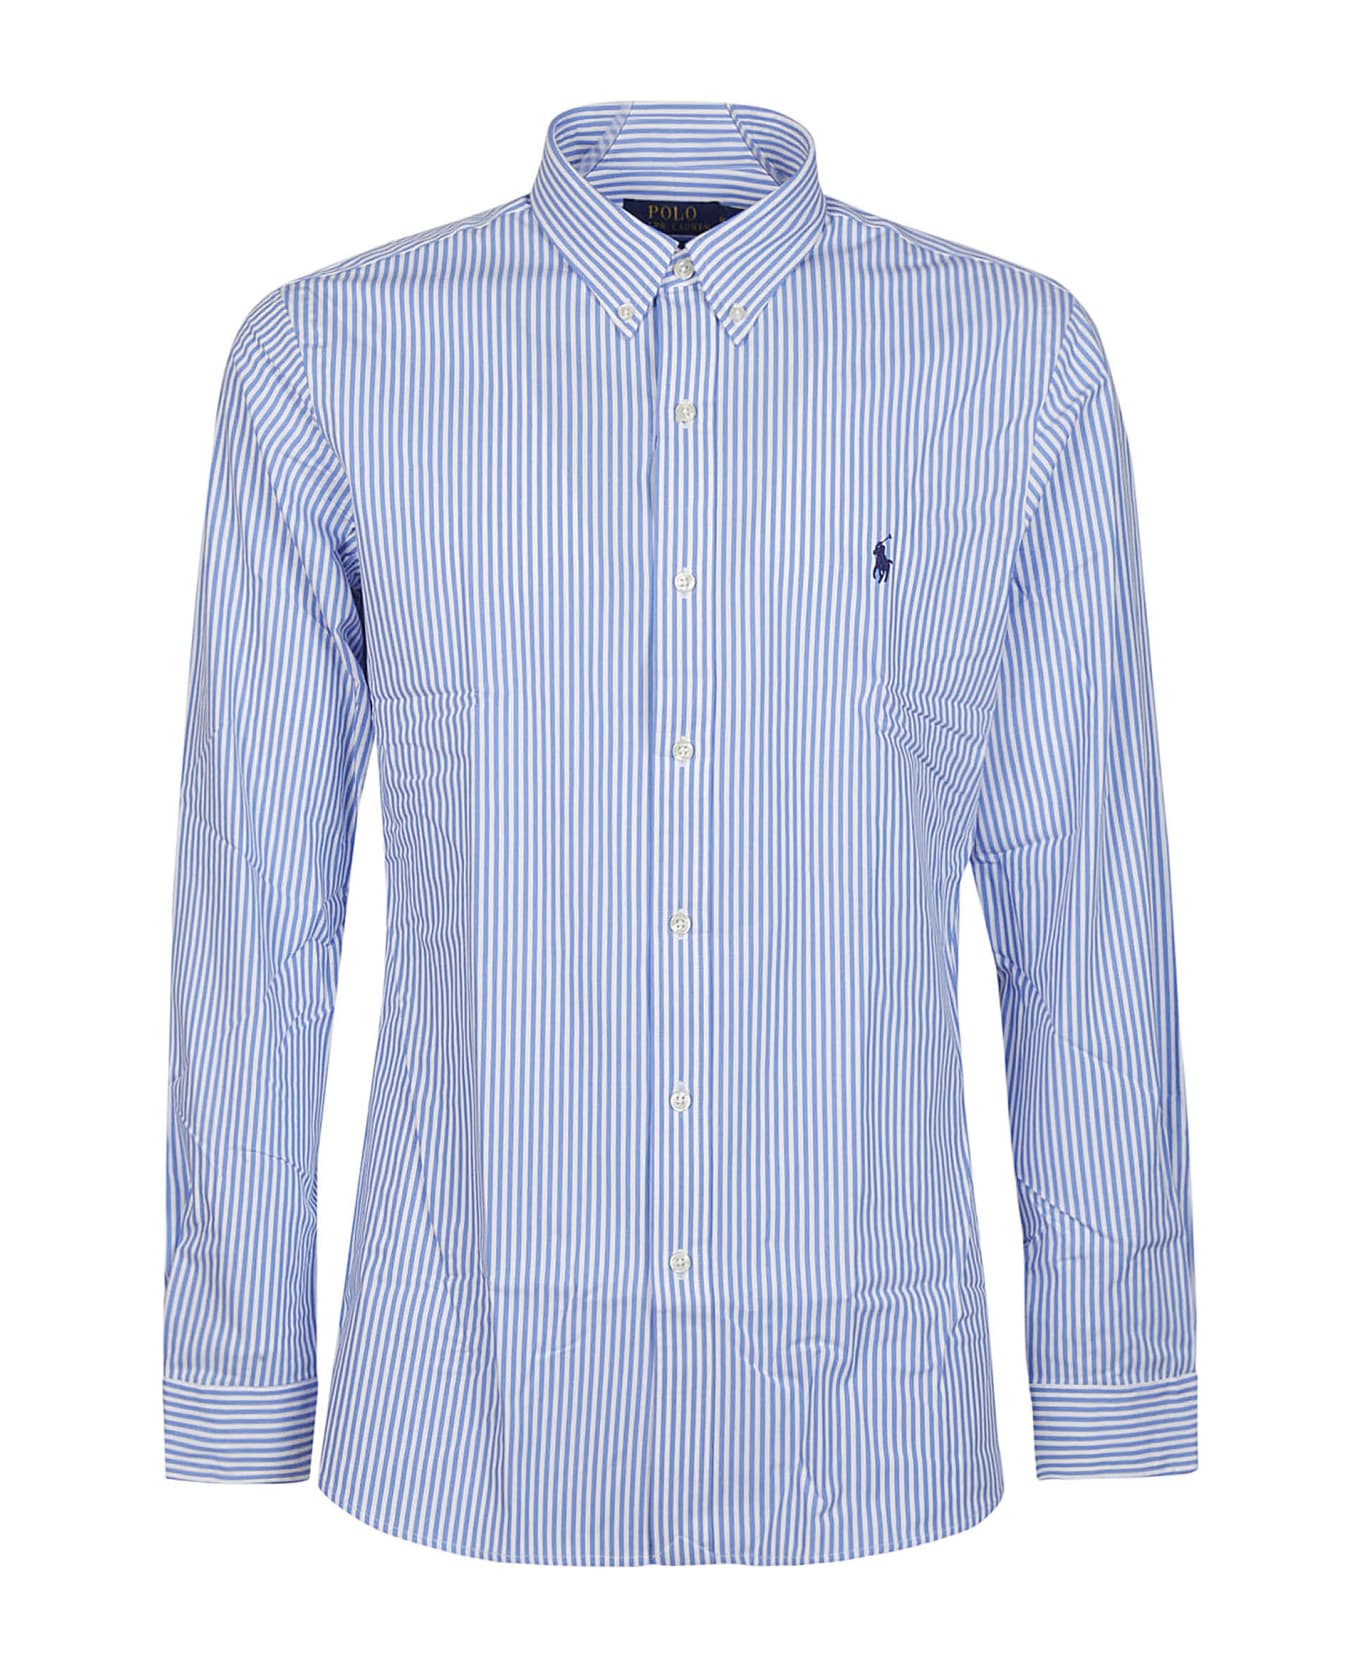 Polo Ralph Lauren Long Sleeve Sport Shirt - Light Blue/white